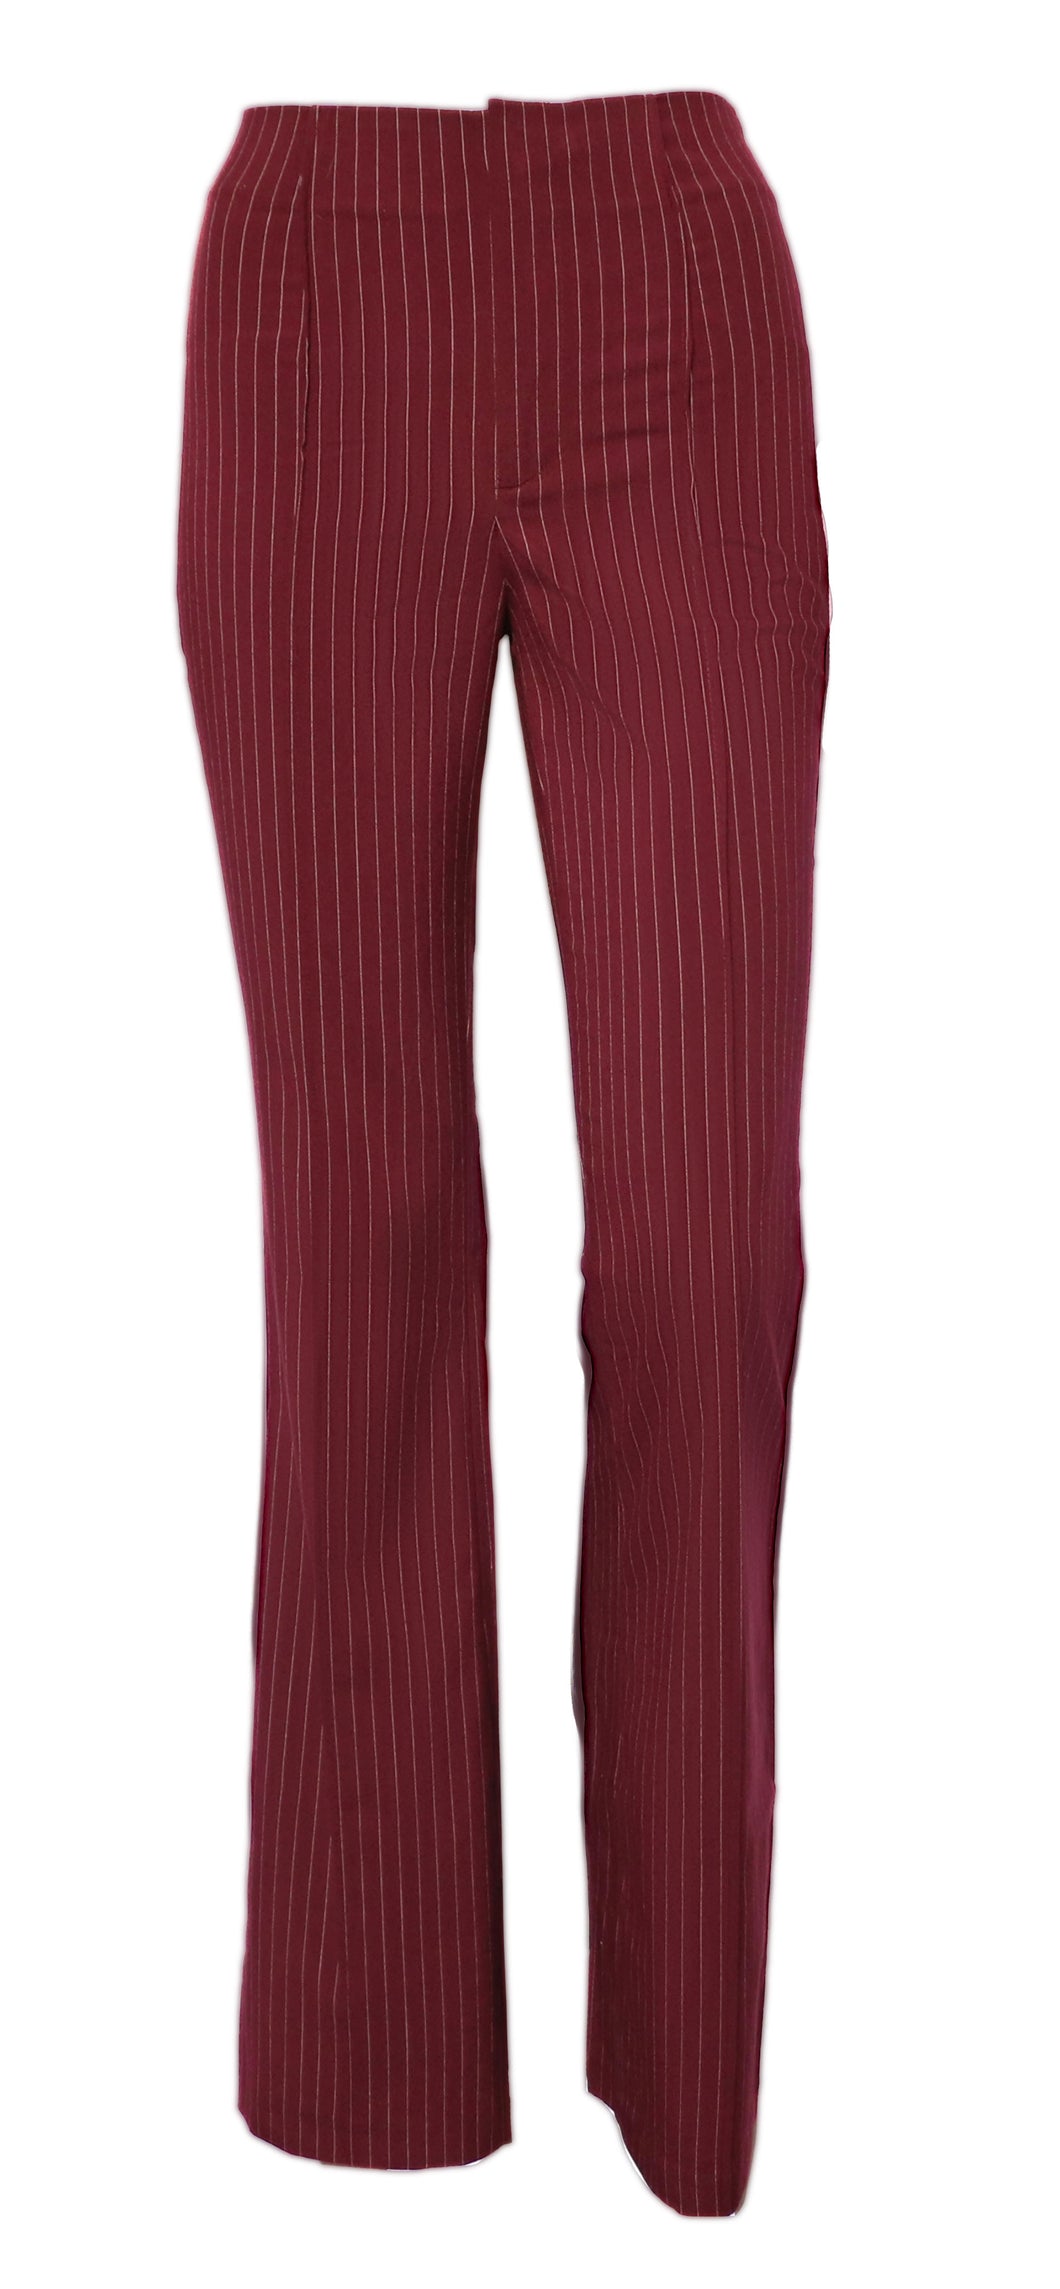 Burgundy high-waist pinstripe pants